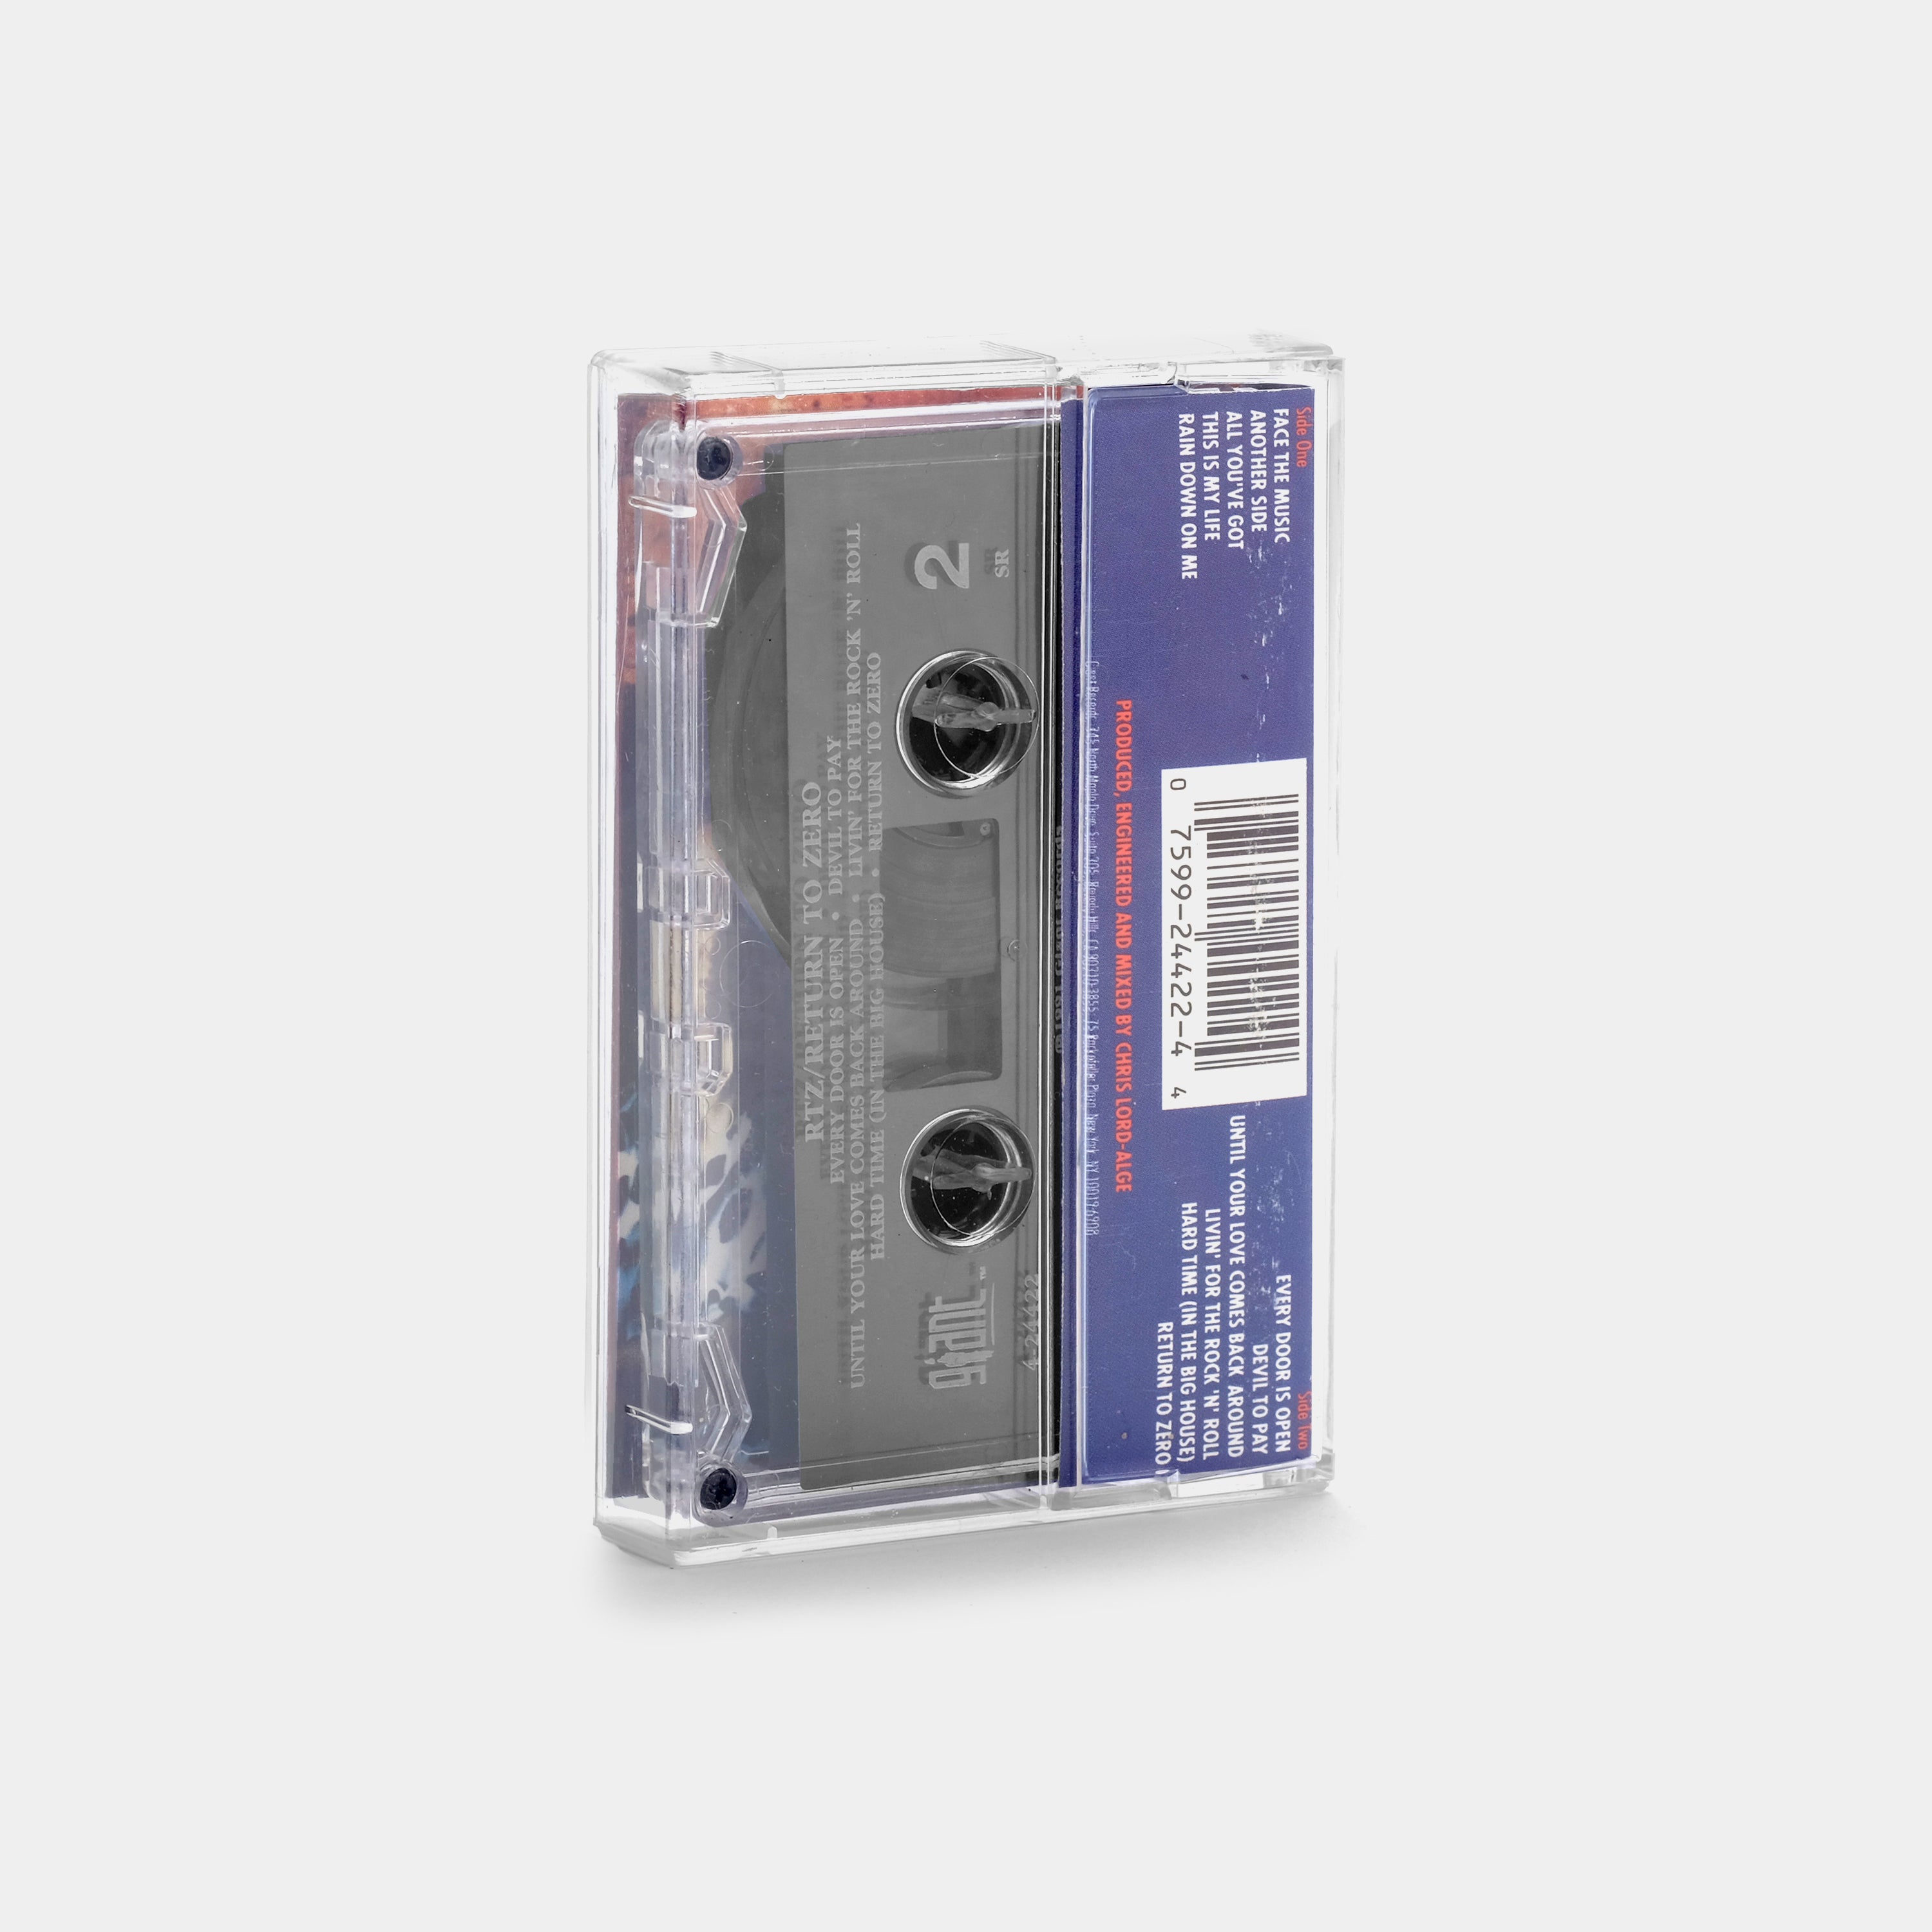 RTZ - Return To Zero Cassette Tape